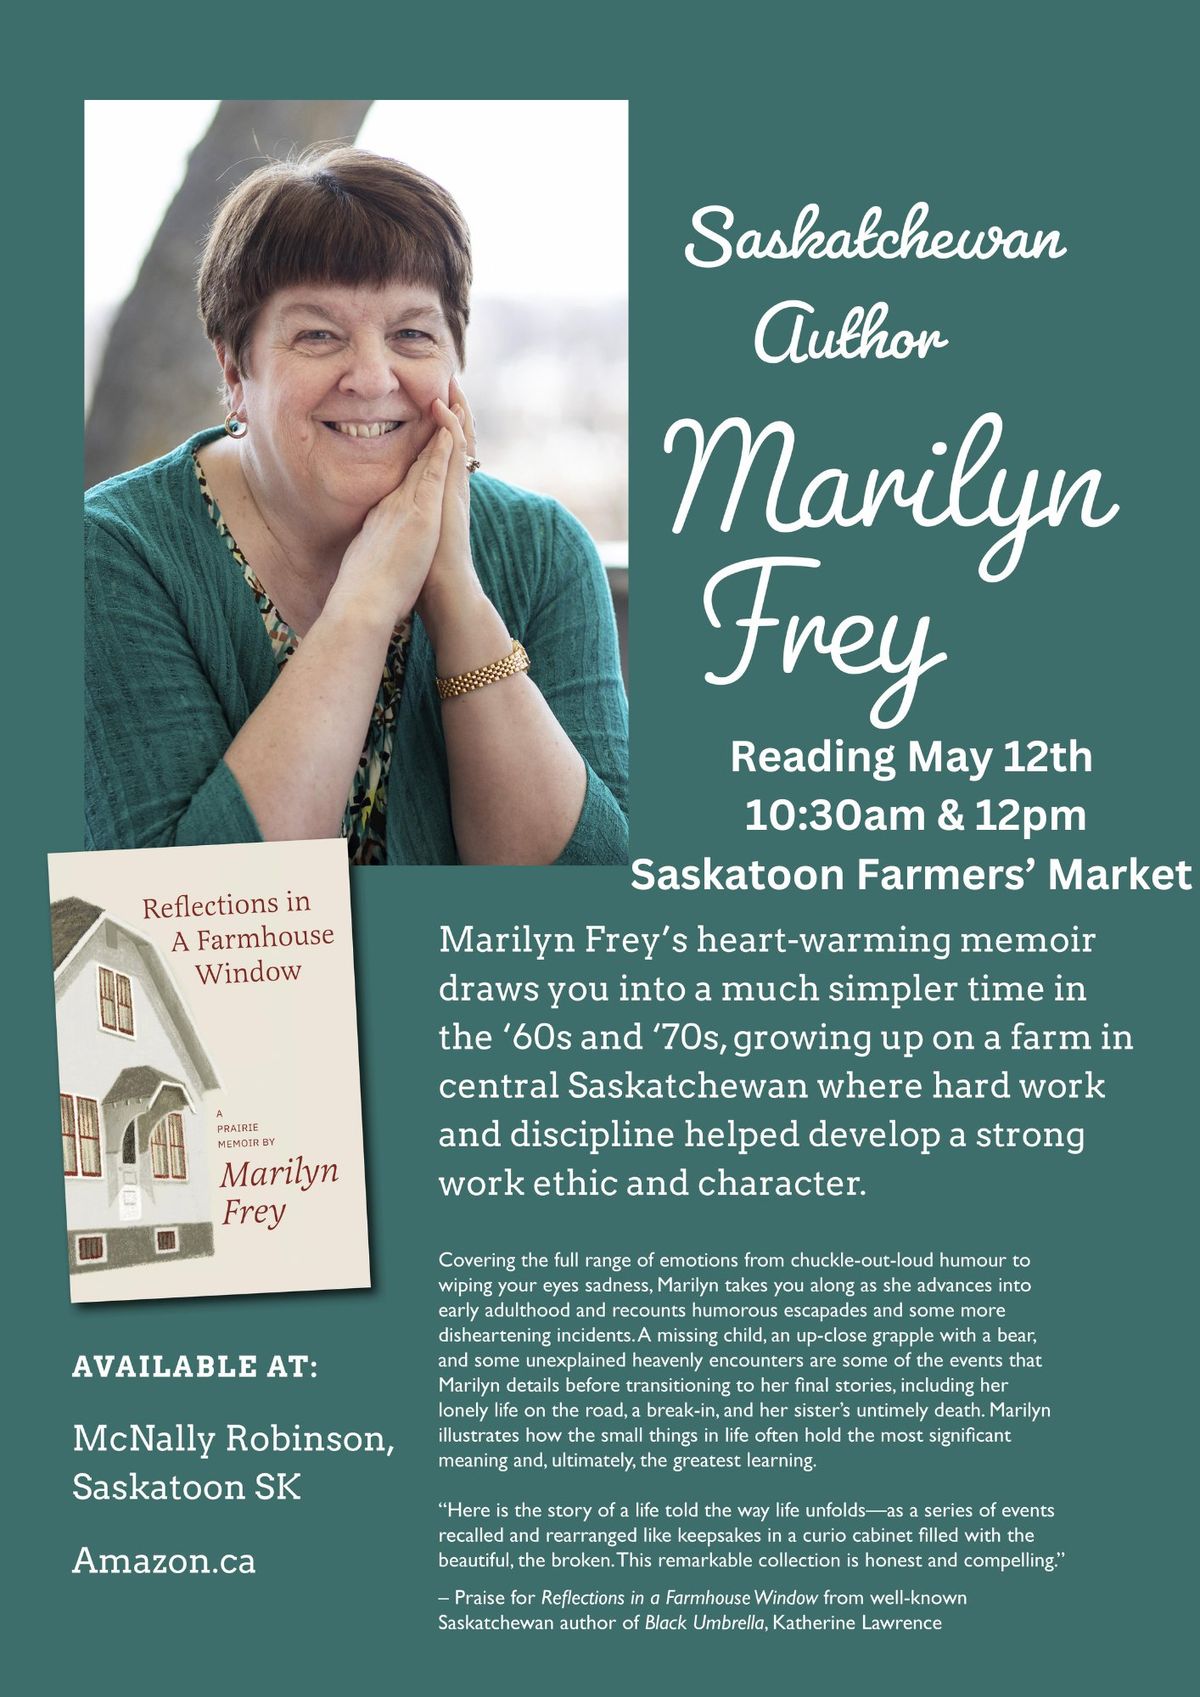 Marilyn Frey - Author Reading at Saskatoon Farmers' Market